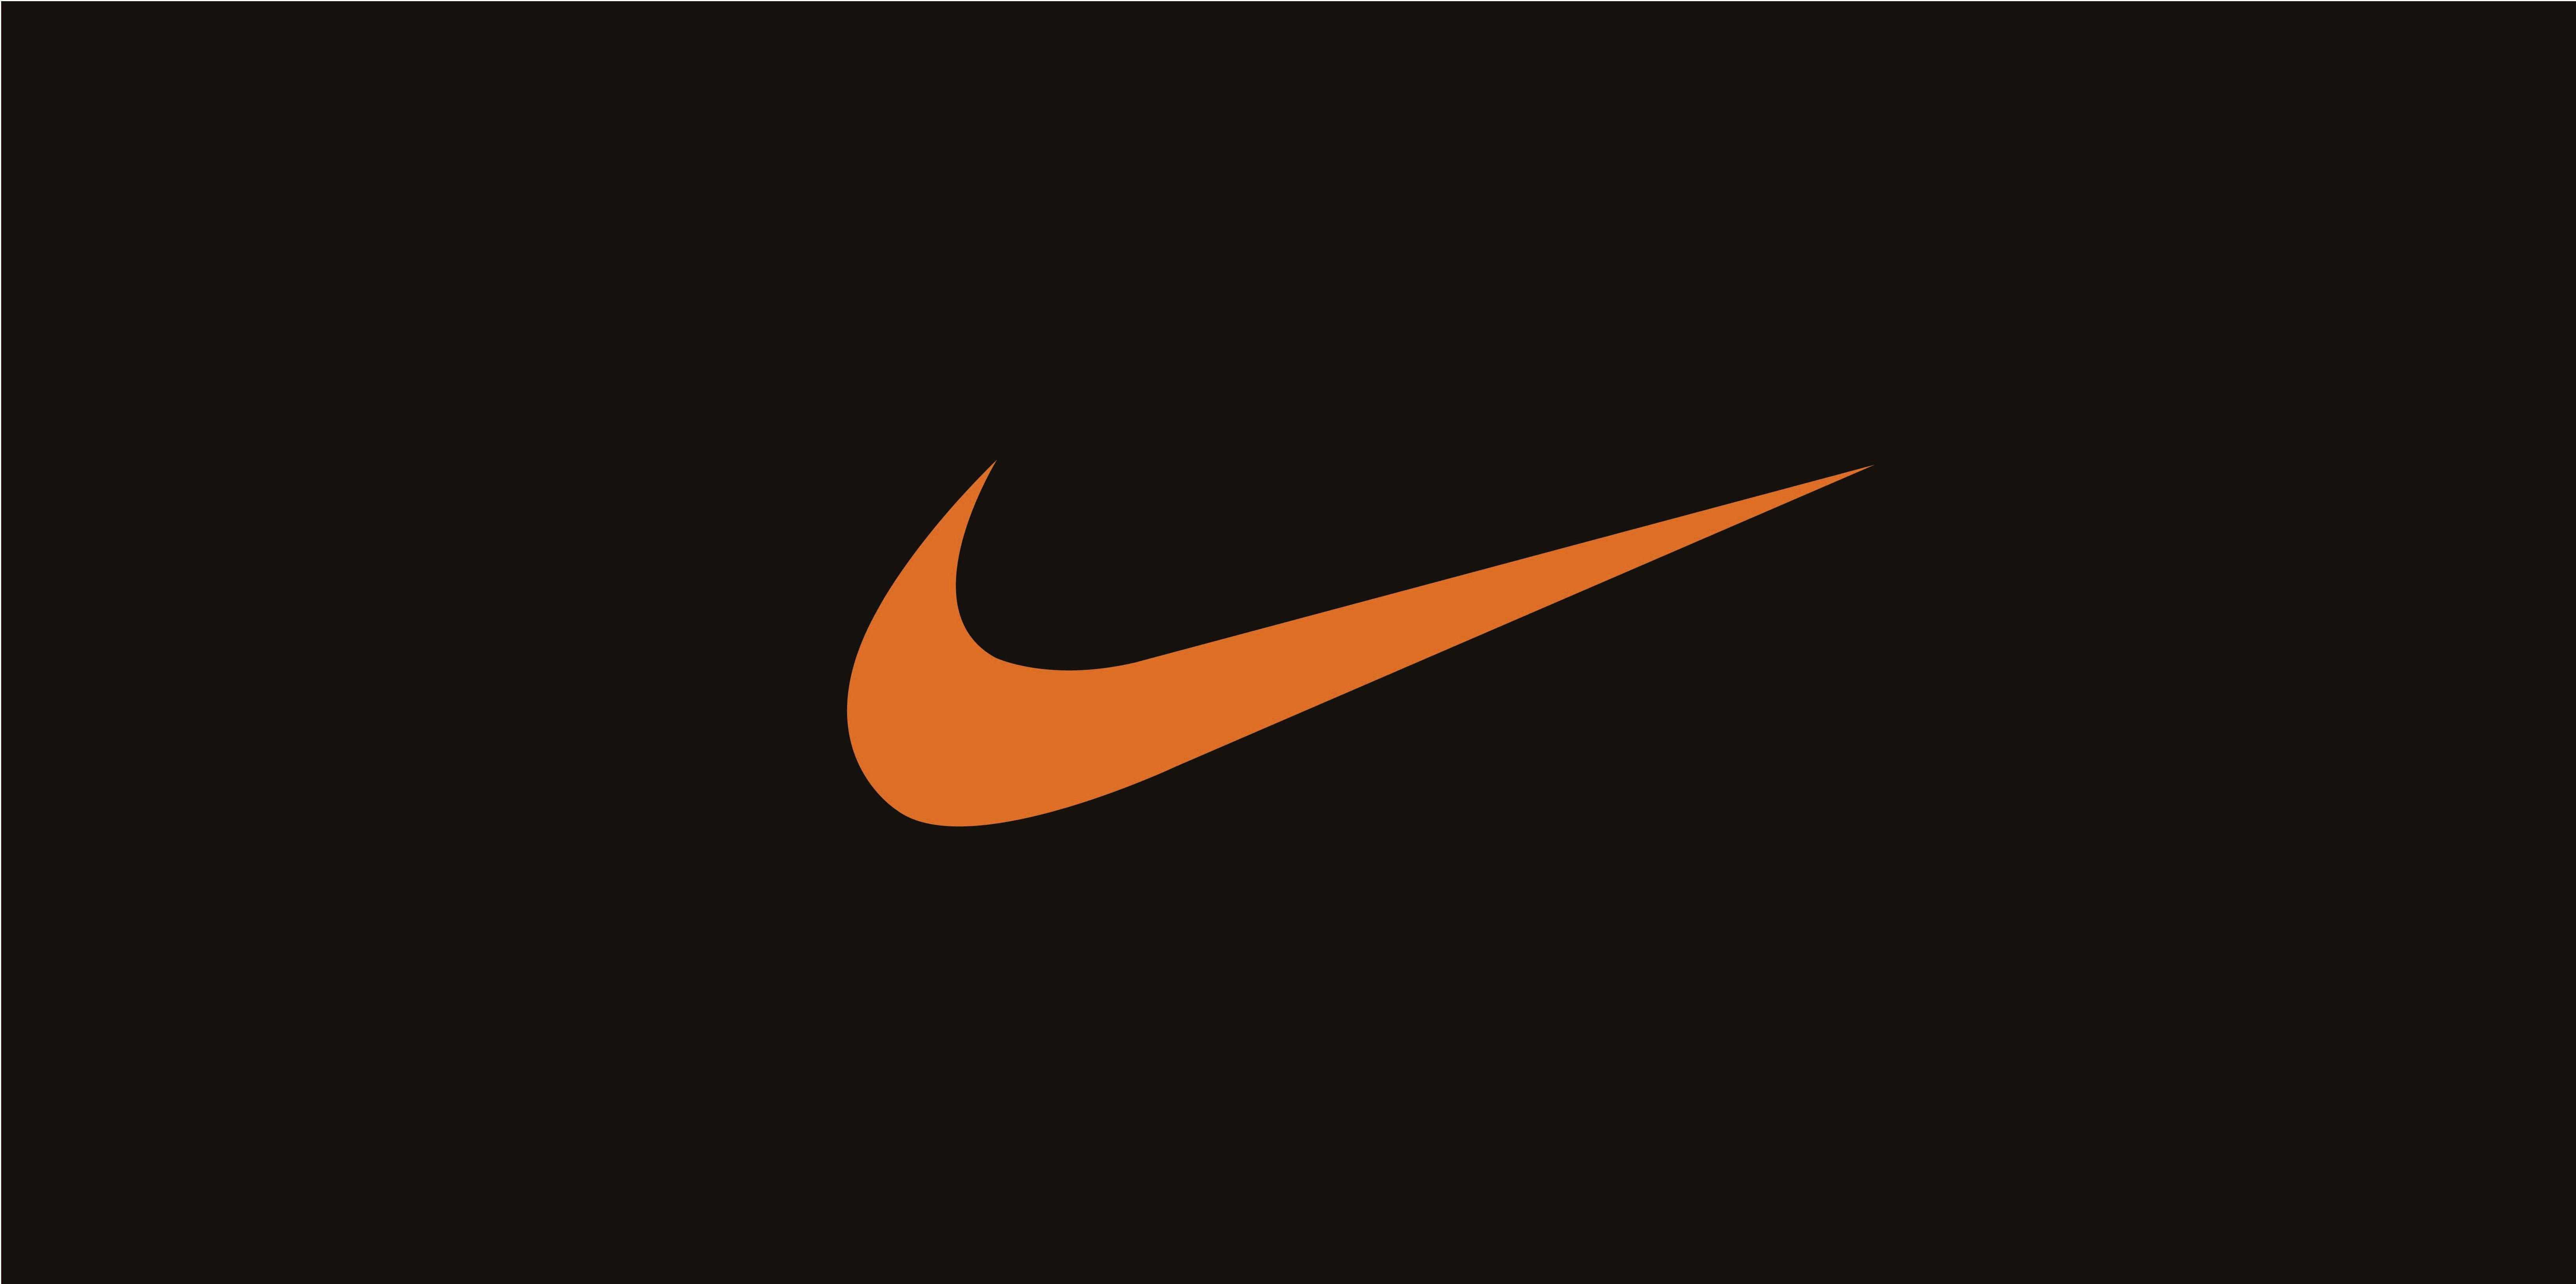 Cool Black and Red Logo - Nike Logo Wallpapers HD free download | PixelsTalk.Net